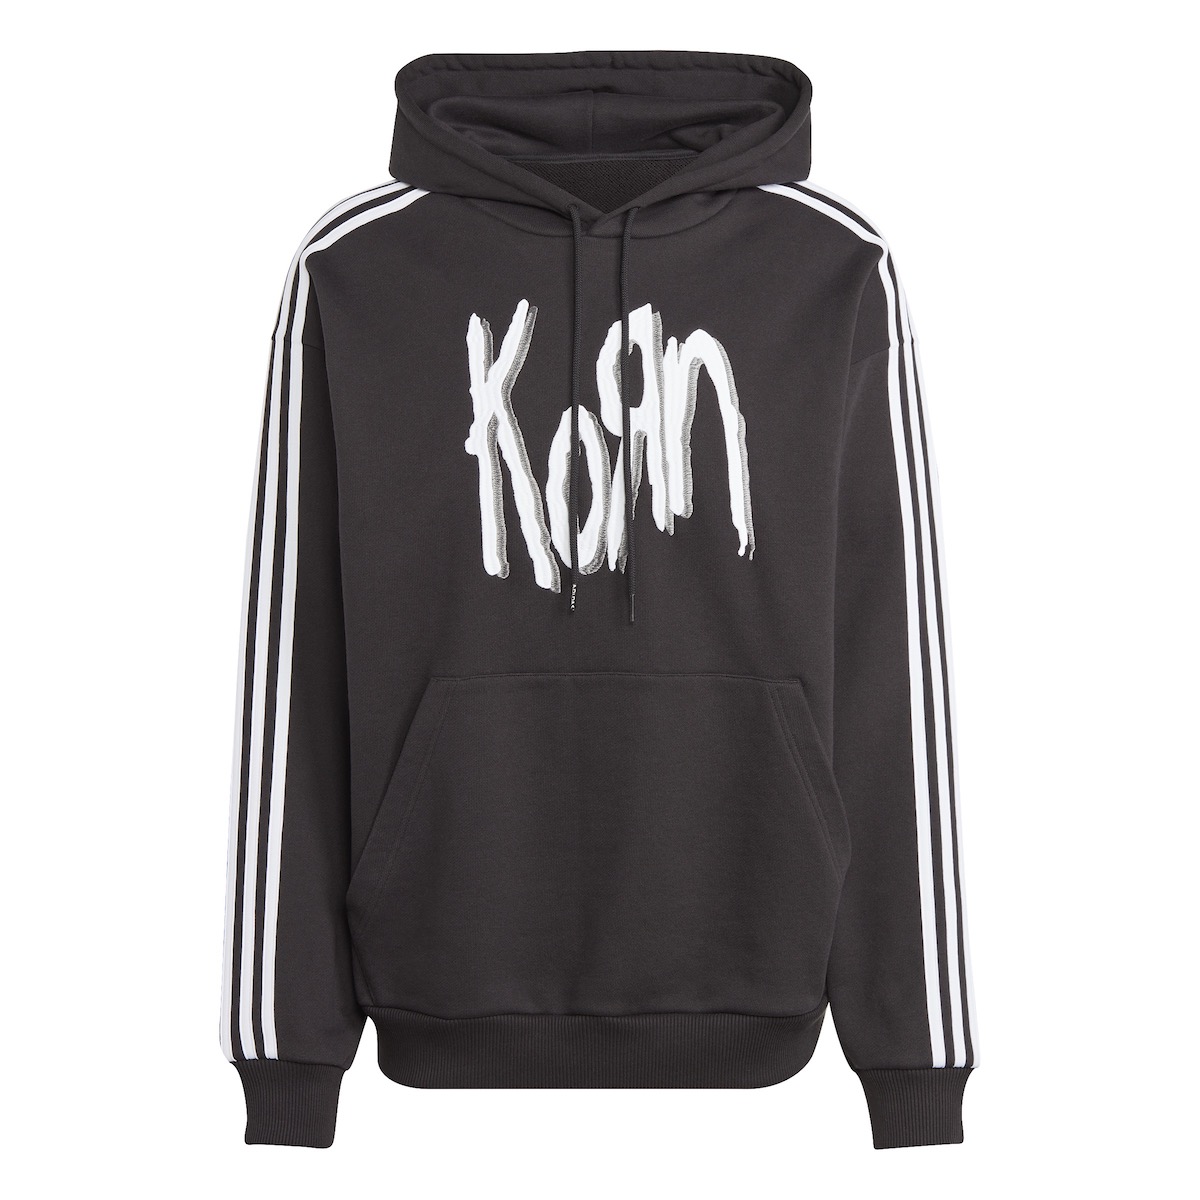 Korn トラックトップ / アディダス adidas Originals